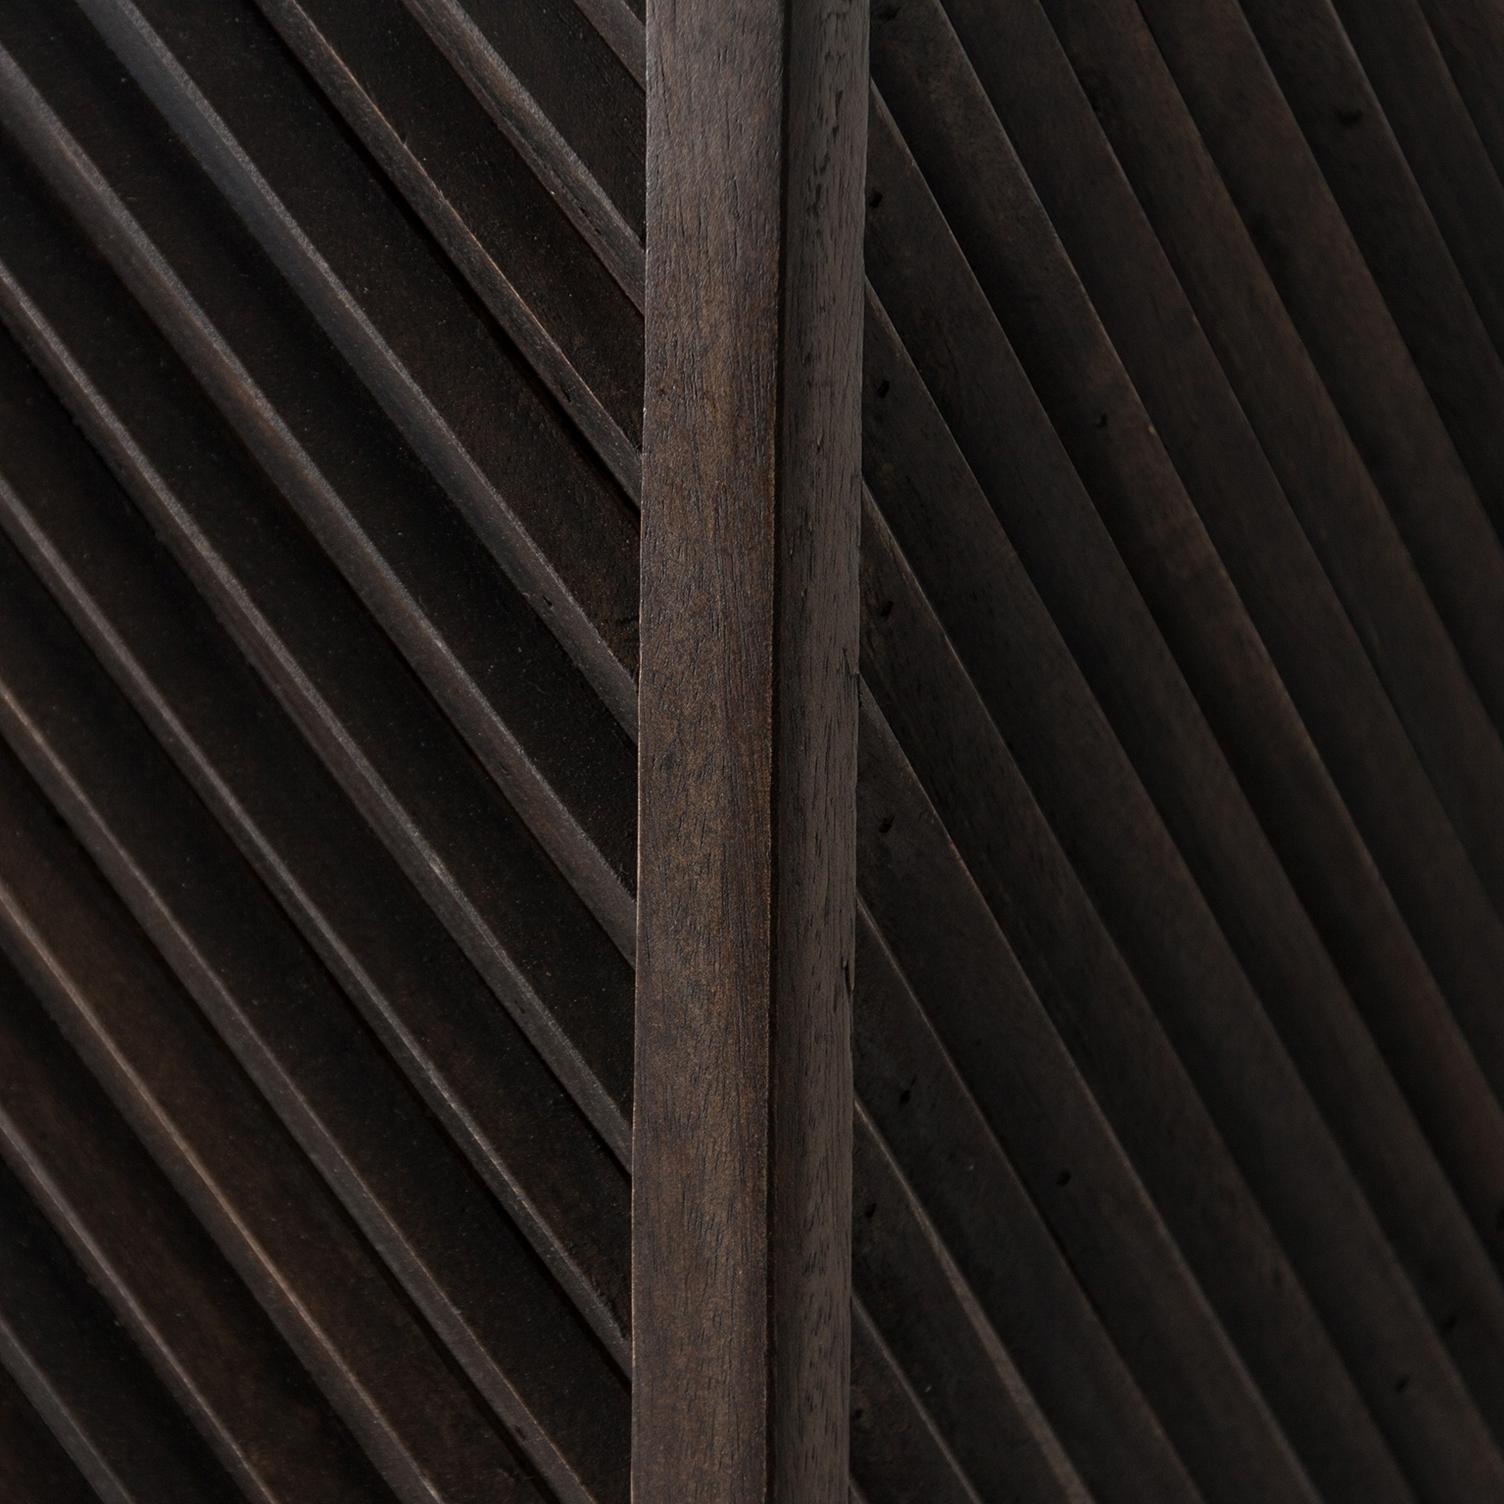 European Wooden and Metal Brutalist Design Sideboard For Sale